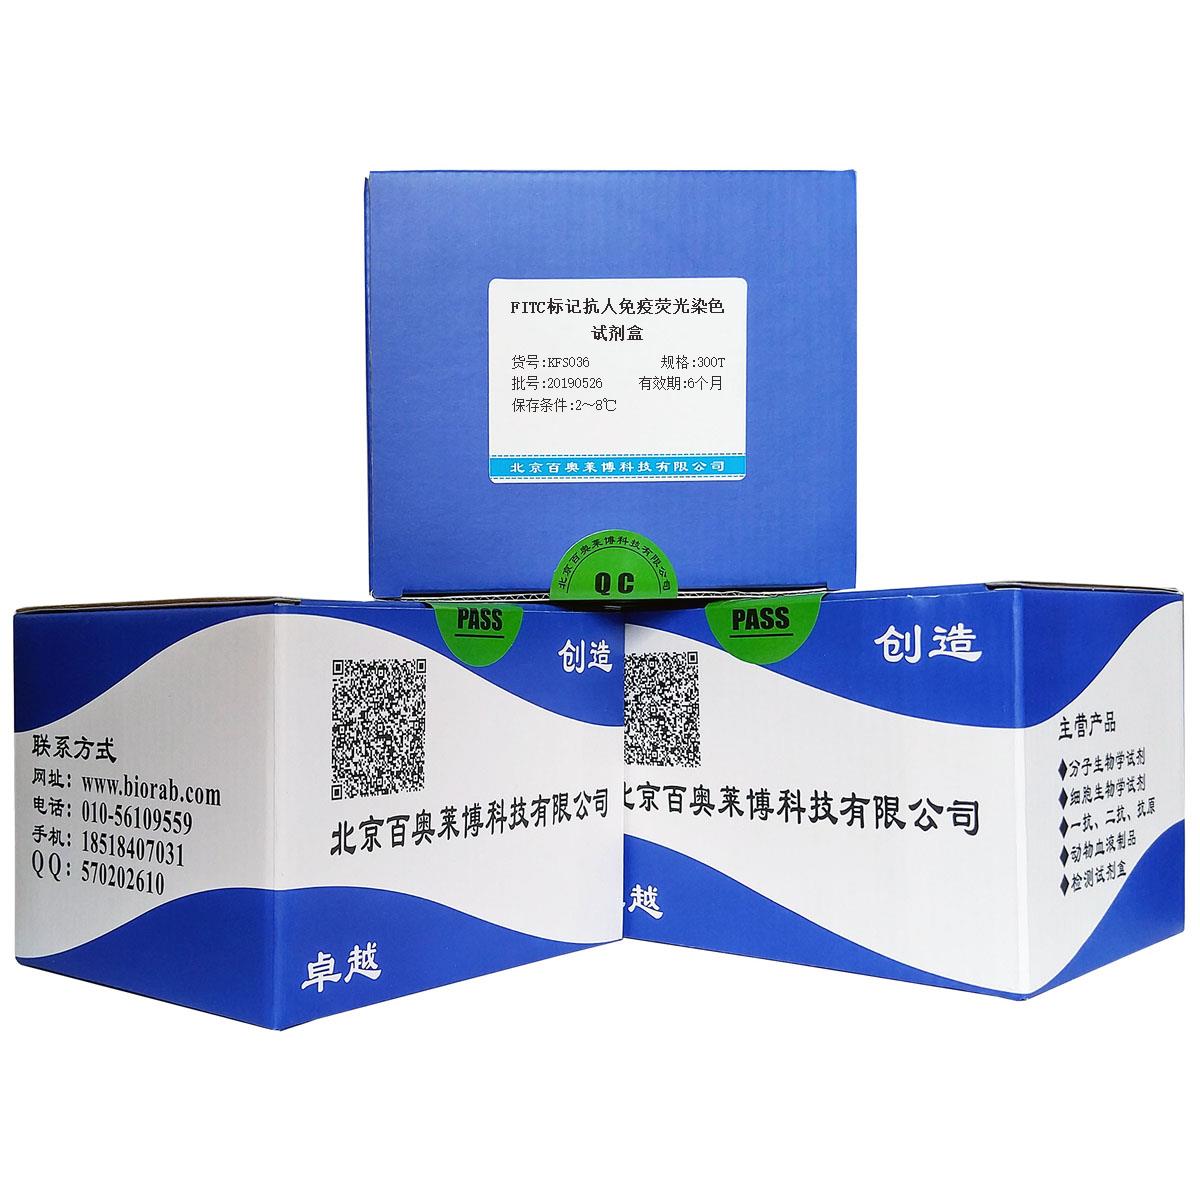 FITC标记抗人免疫荧光染色试剂盒北京价格